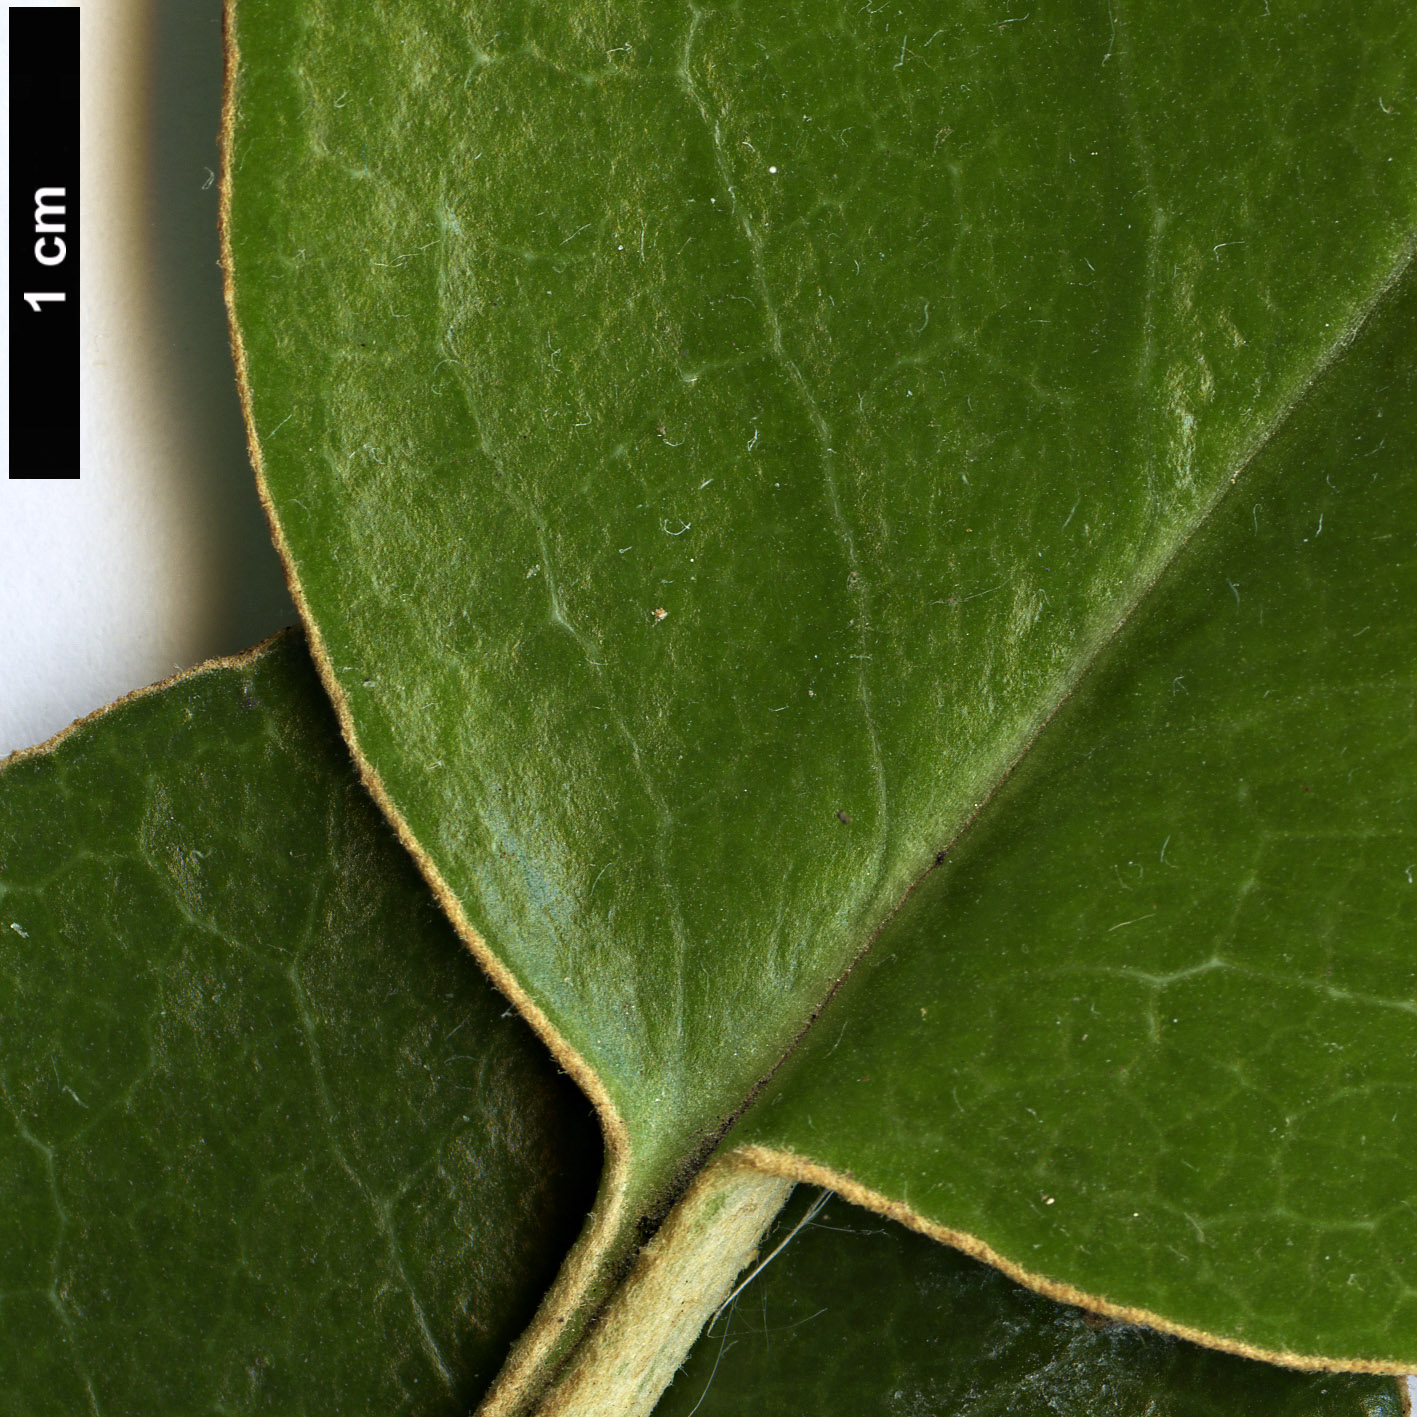 High resolution image: Family: Asteraceae - Genus: Brachyglottis - Taxon: rotundifolia